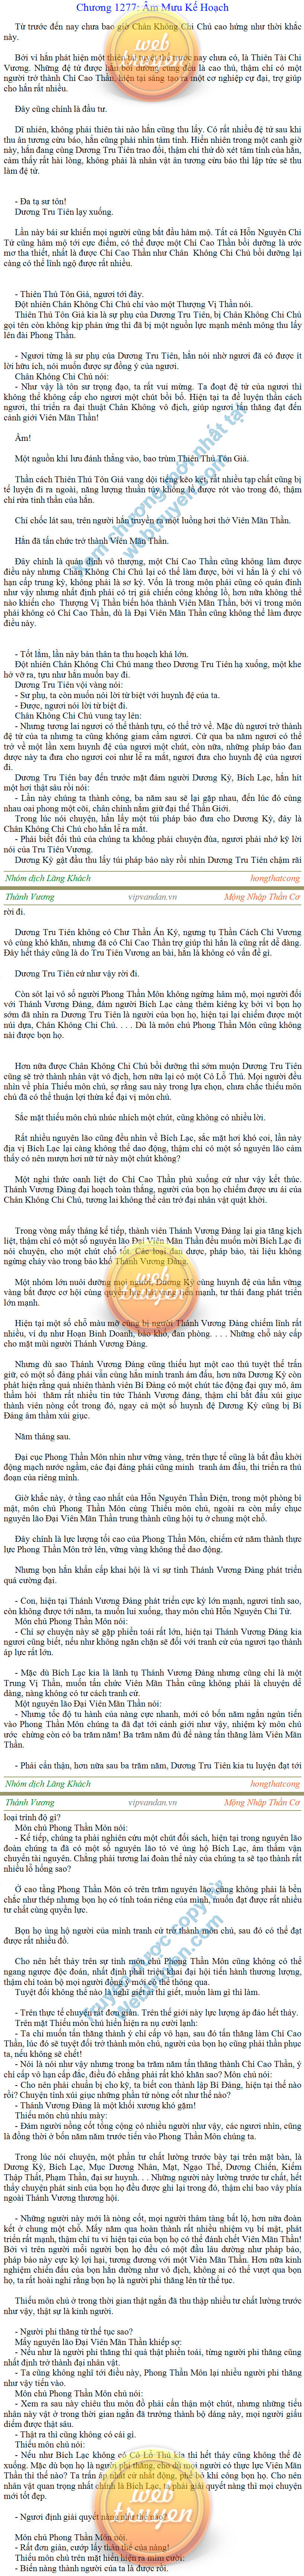 Thanh-vuong-1277.png